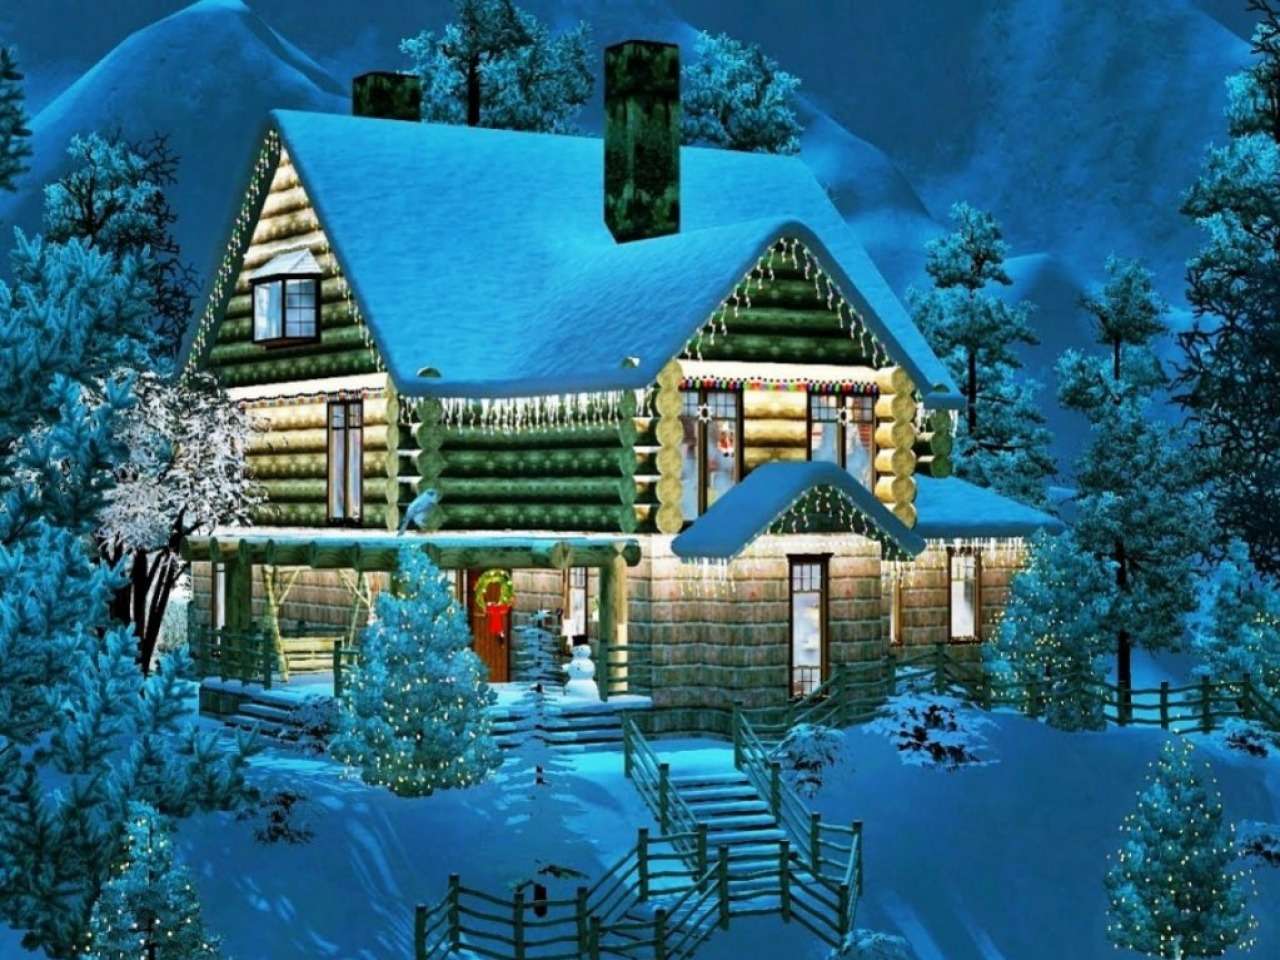 Ett sommarhus vackert inrett på vintern :) Pussel online